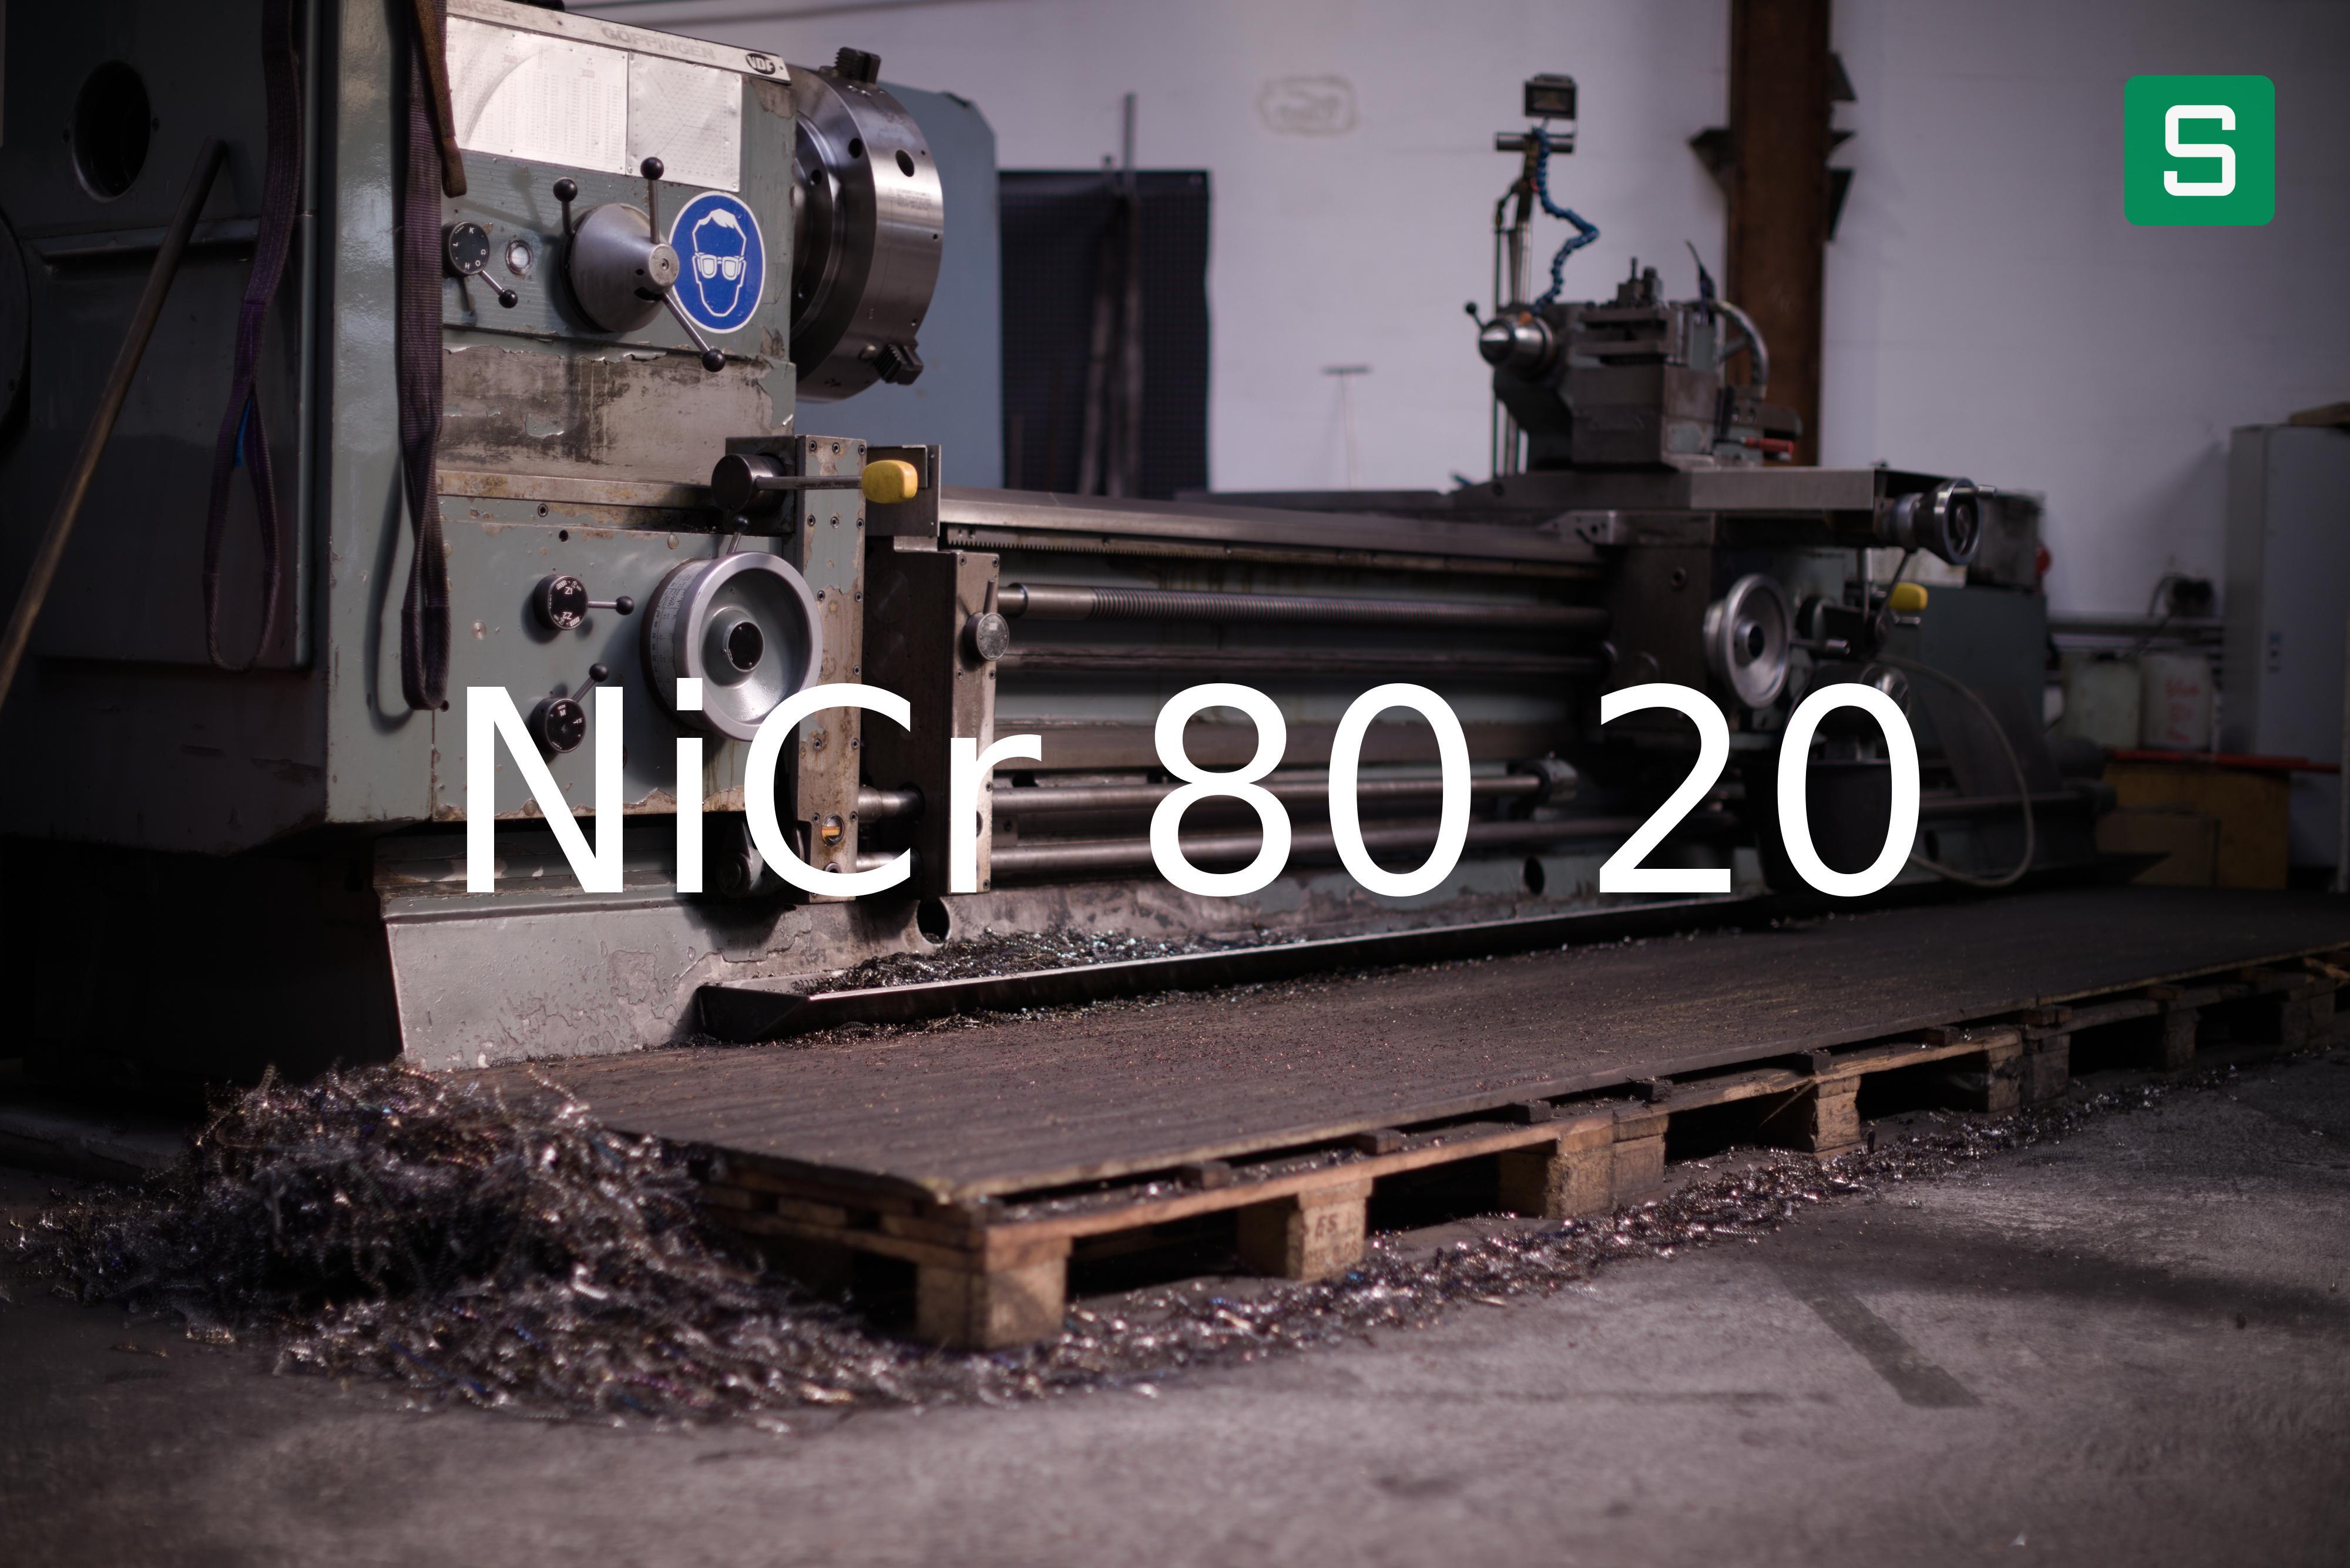 Steel Material: NiCr 80 20